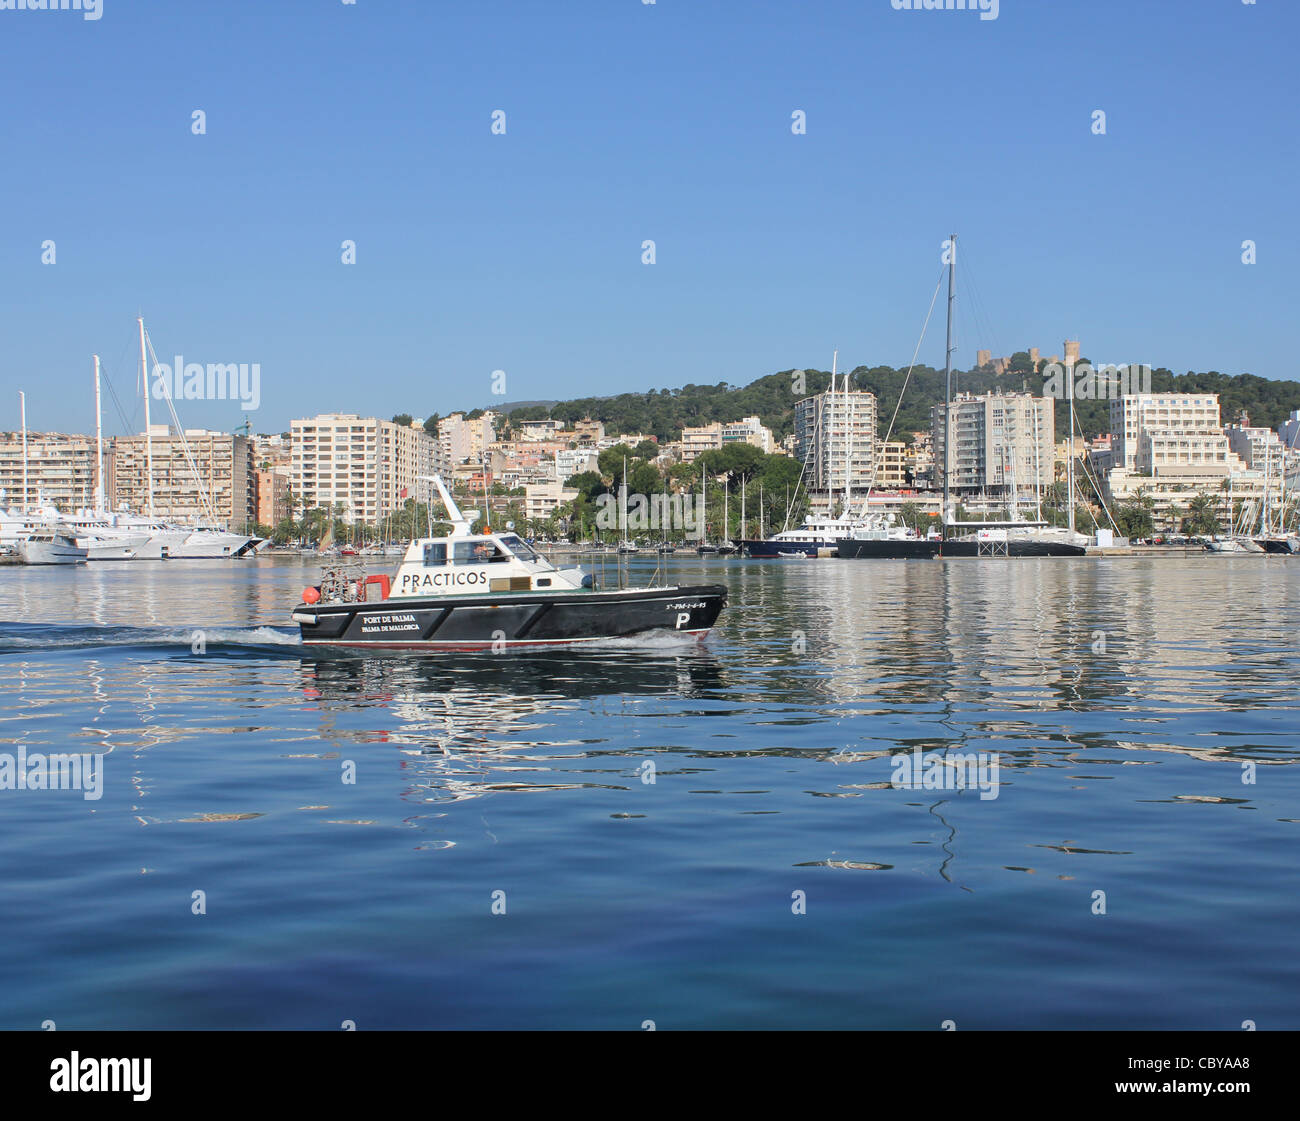 Scene in the Port of Palma de Mallorca with Practicos / Marine Pilot launch passing Paseo Maritimo, Palma de Mallorca / Majorca Stock Photo